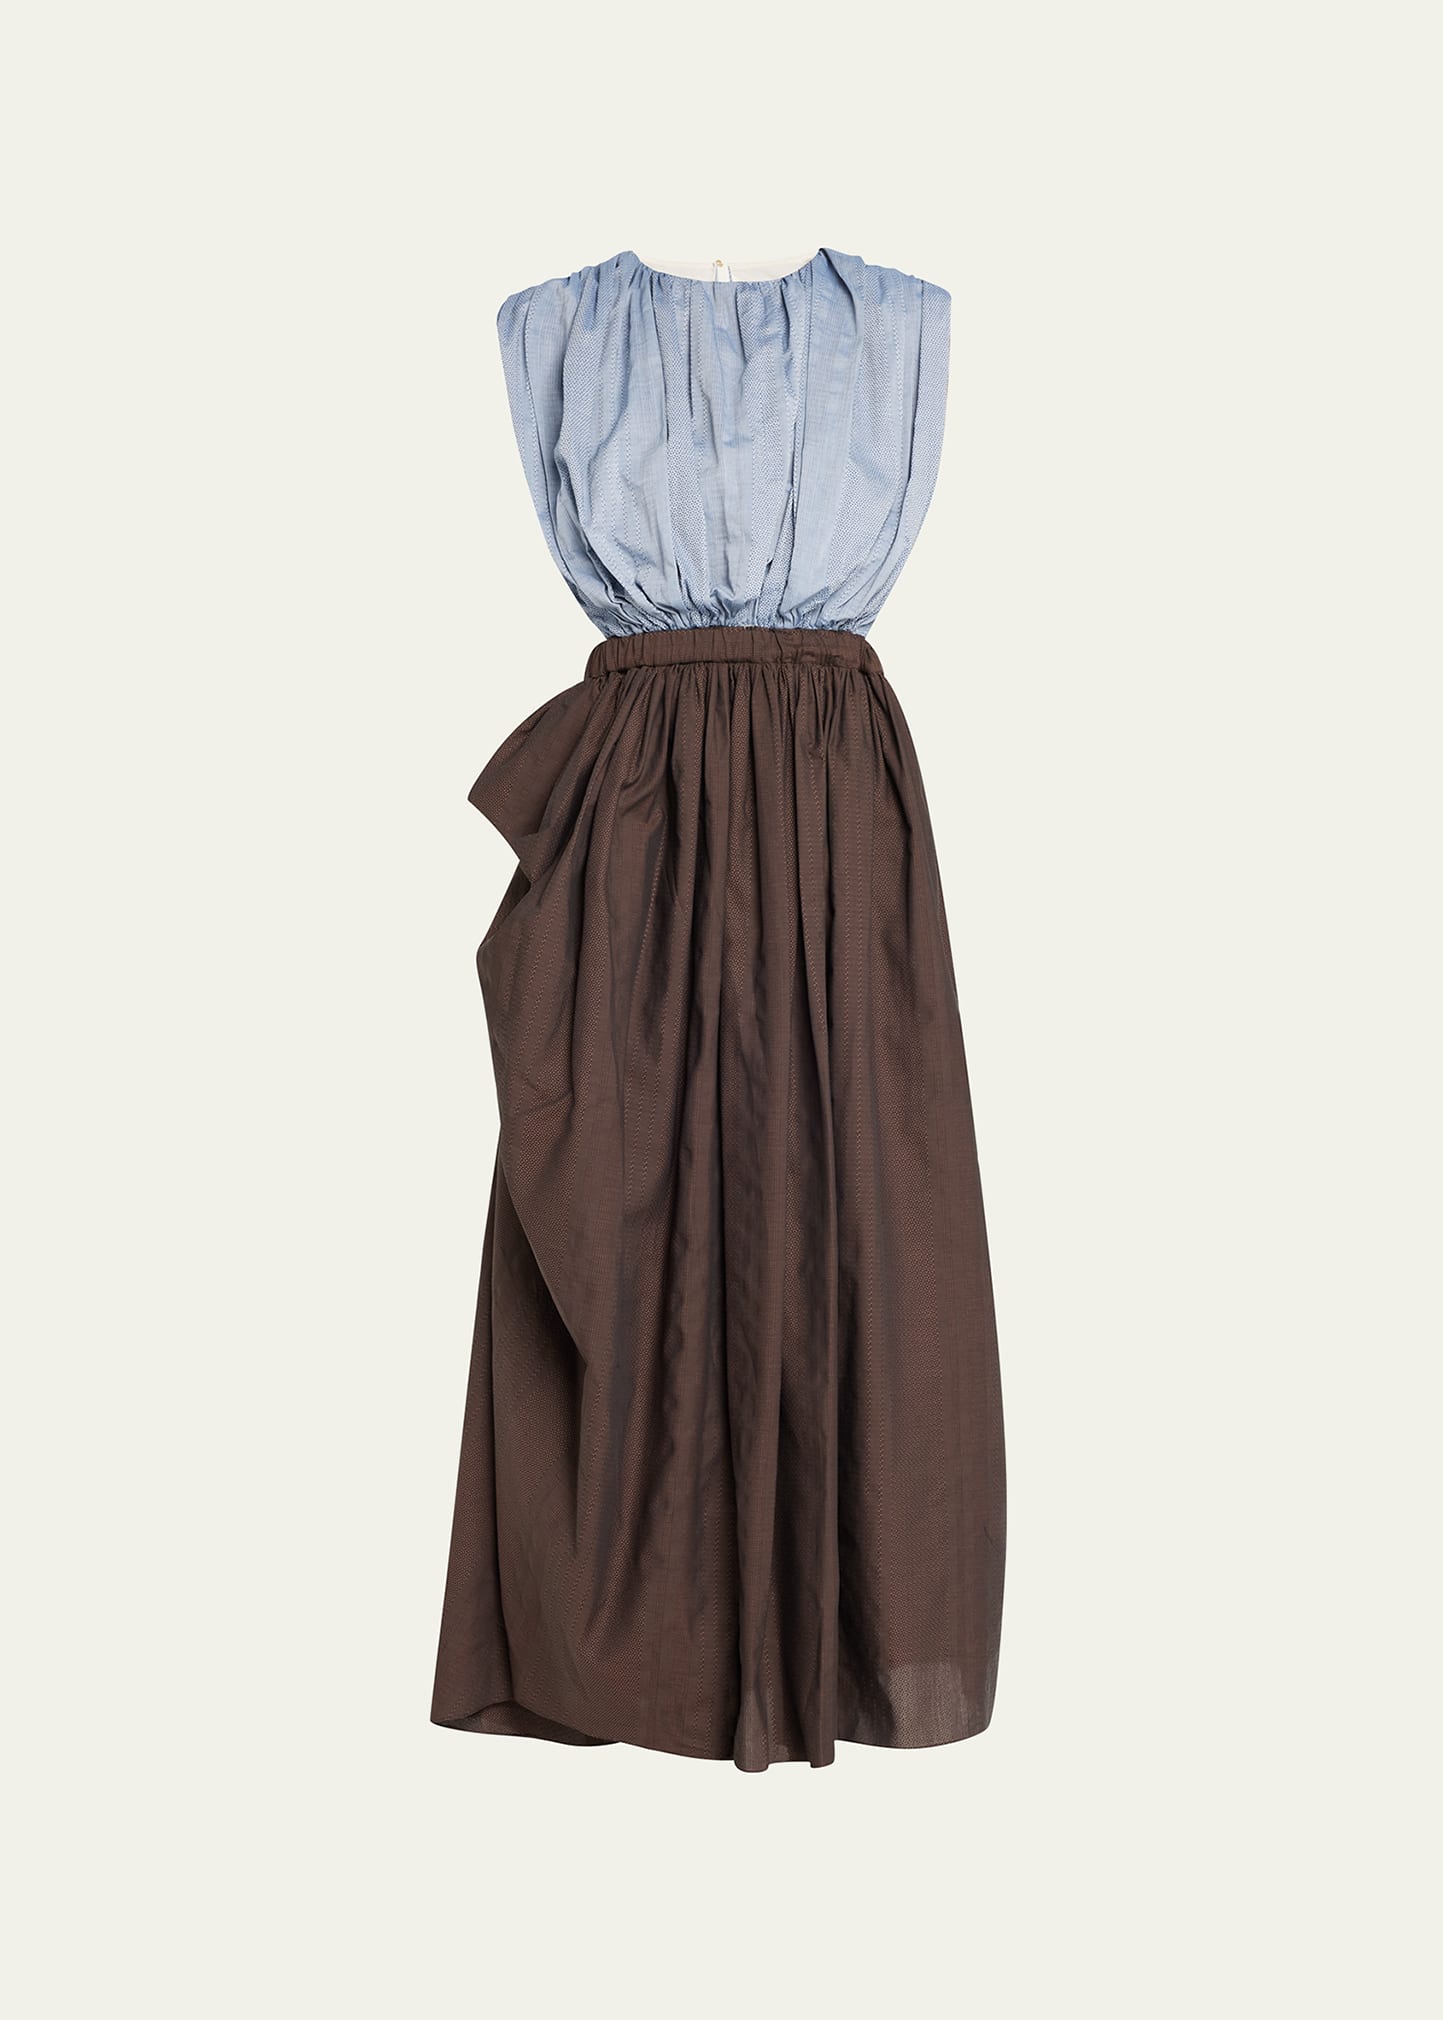 DIOTIMA Mixed Motif Midi Dress with Bustle Detail